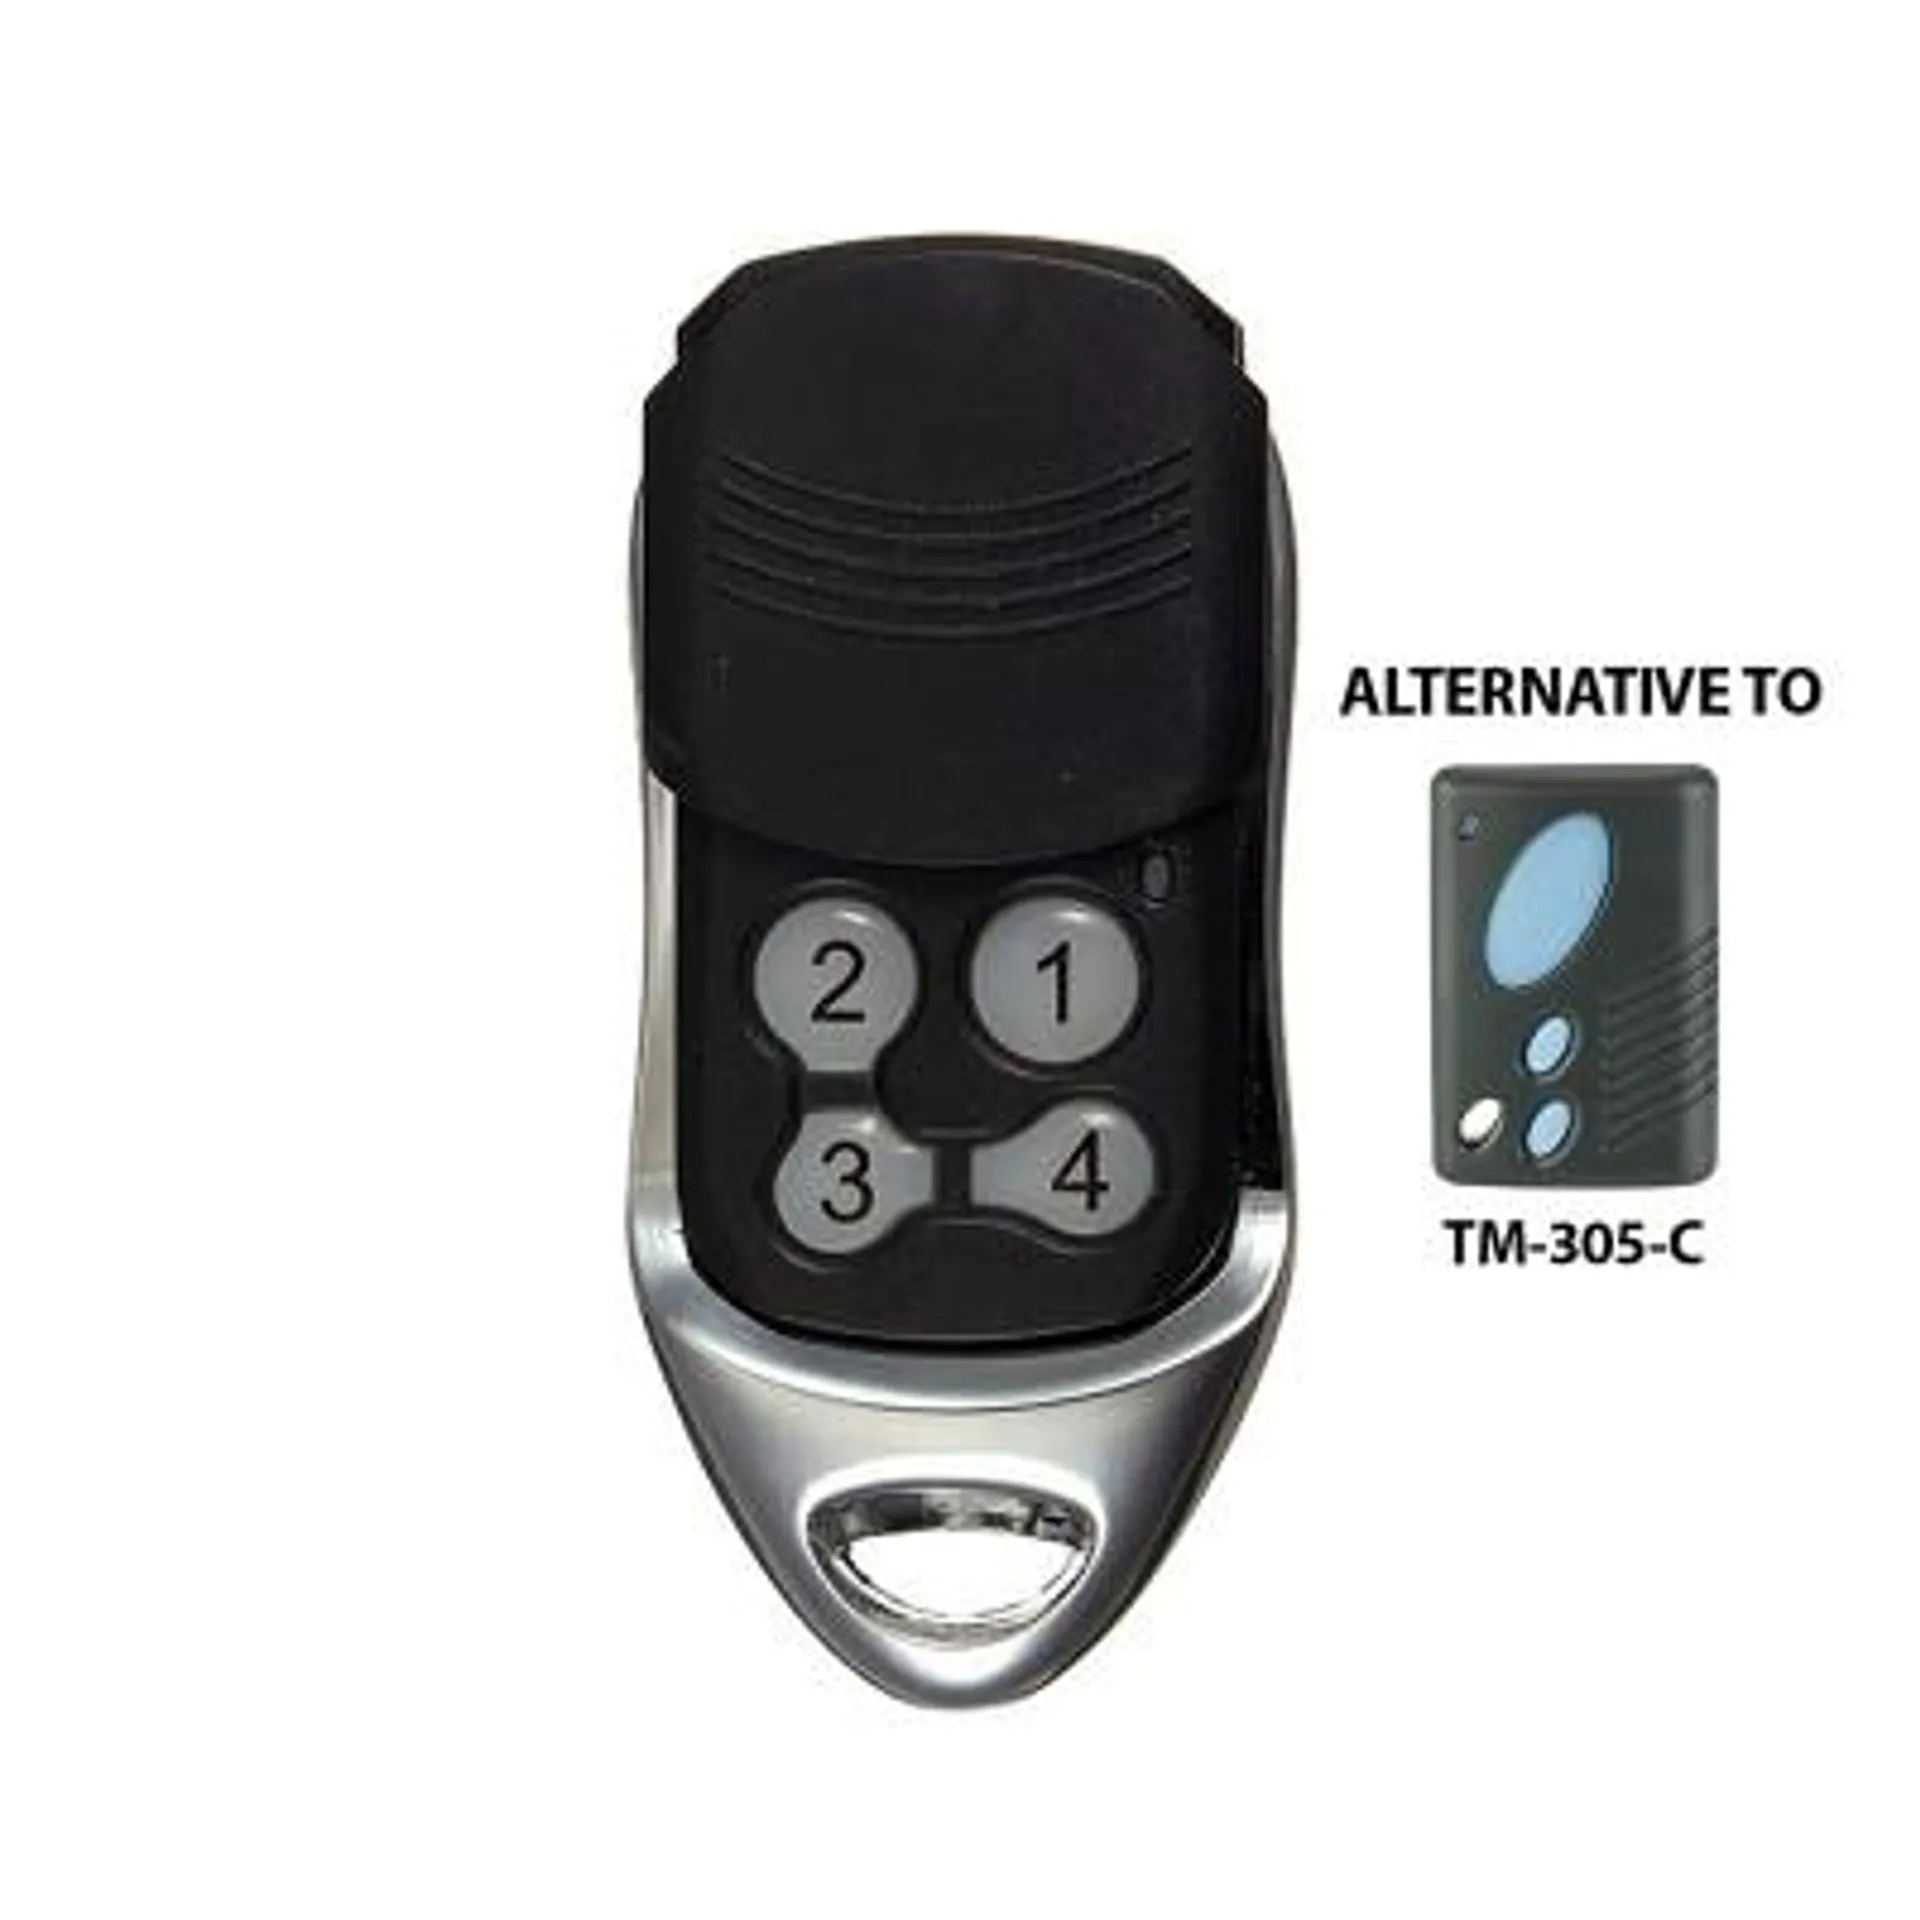 SGT070 - Alternate TM305-C remote. Non genuine